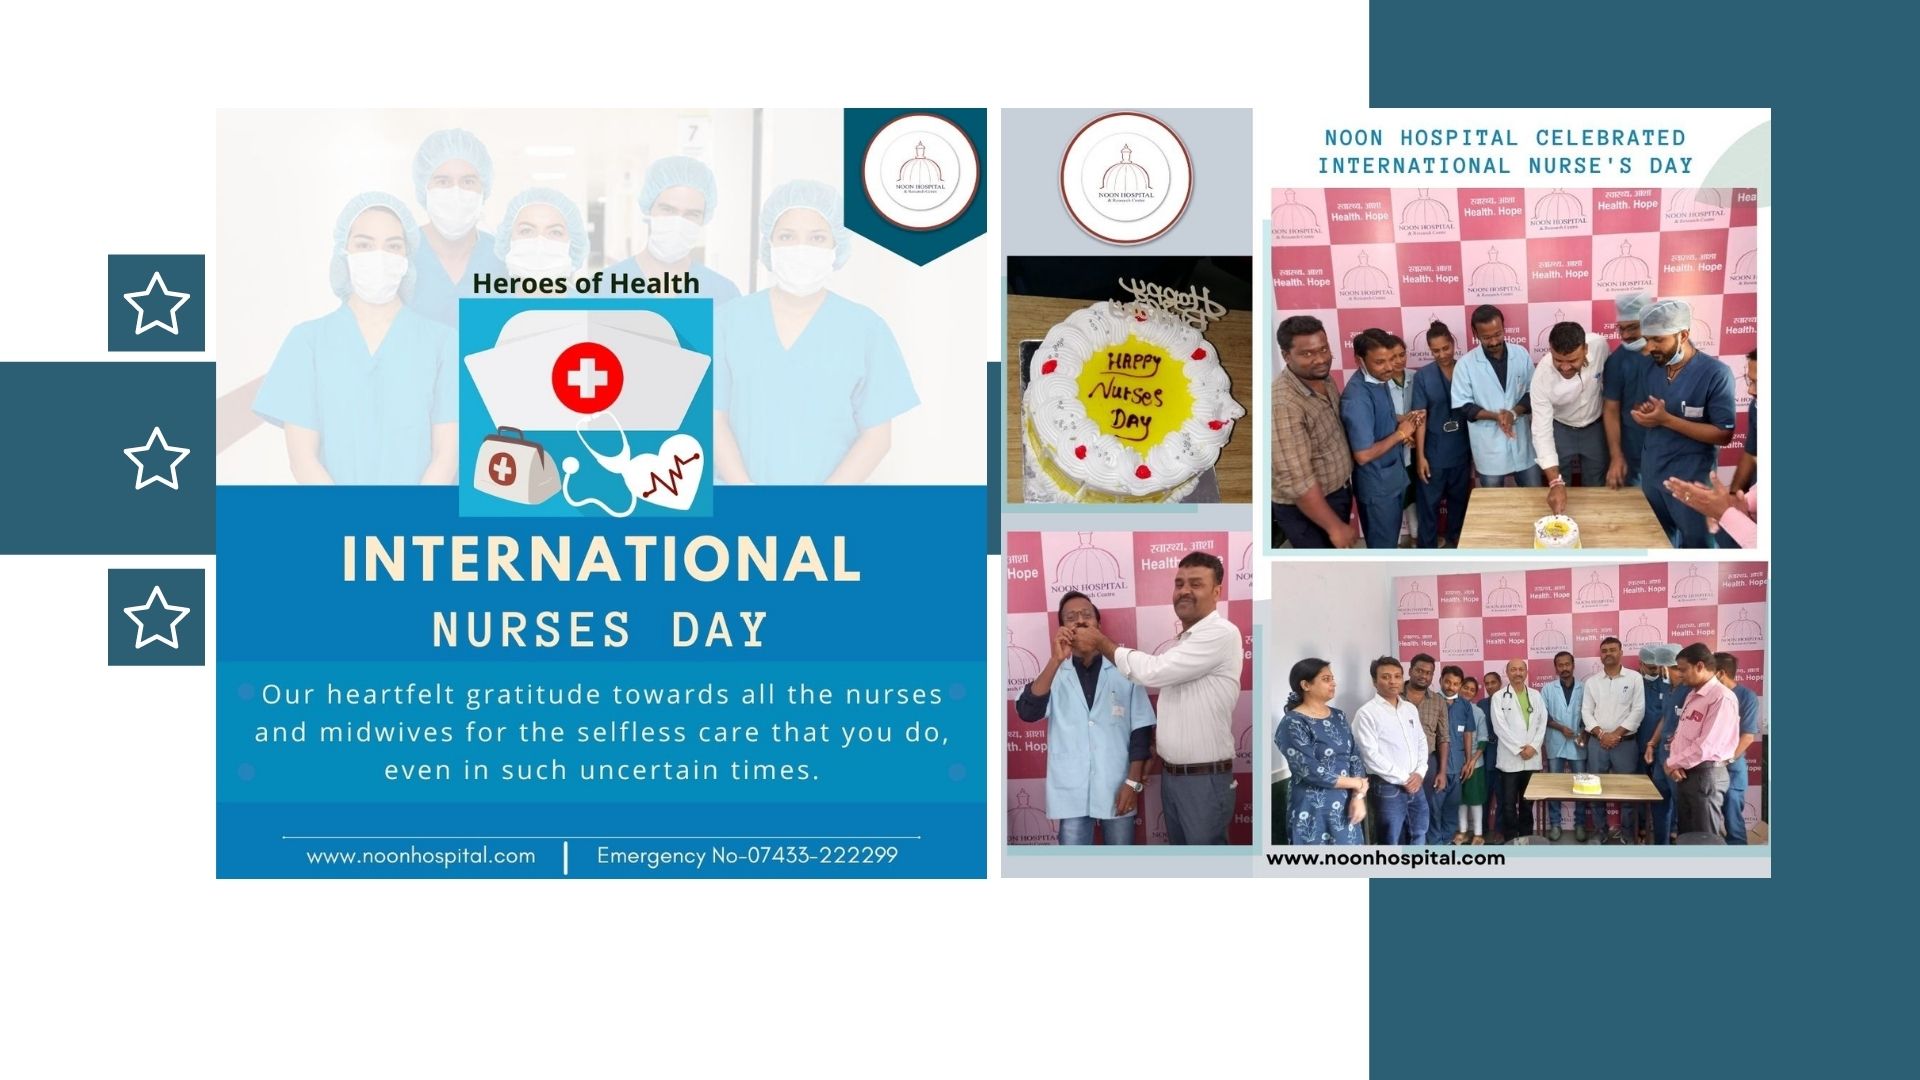 #International Nurses Day